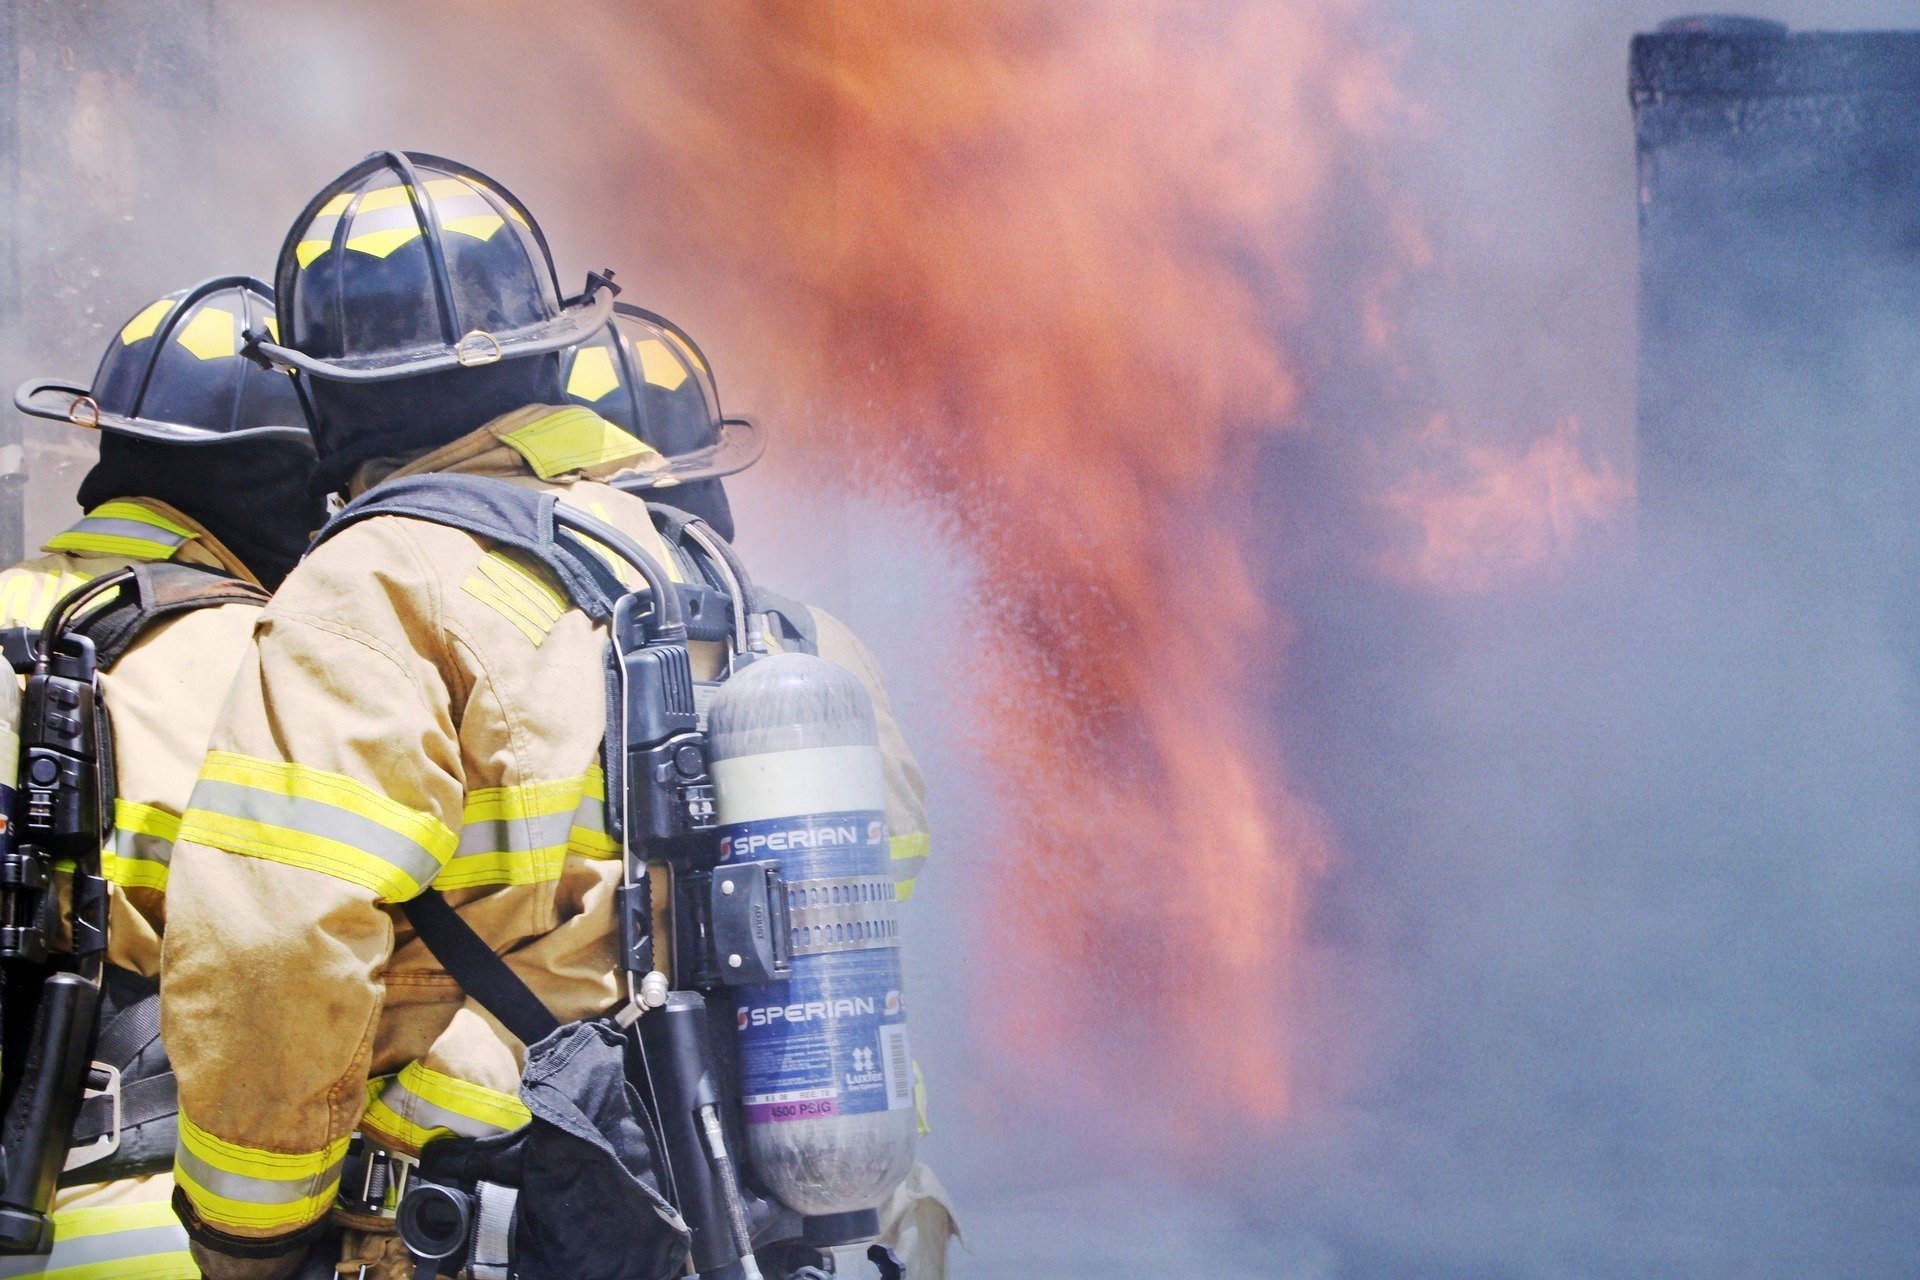 Bomberos combaten incendio. Fuente: Pixabay